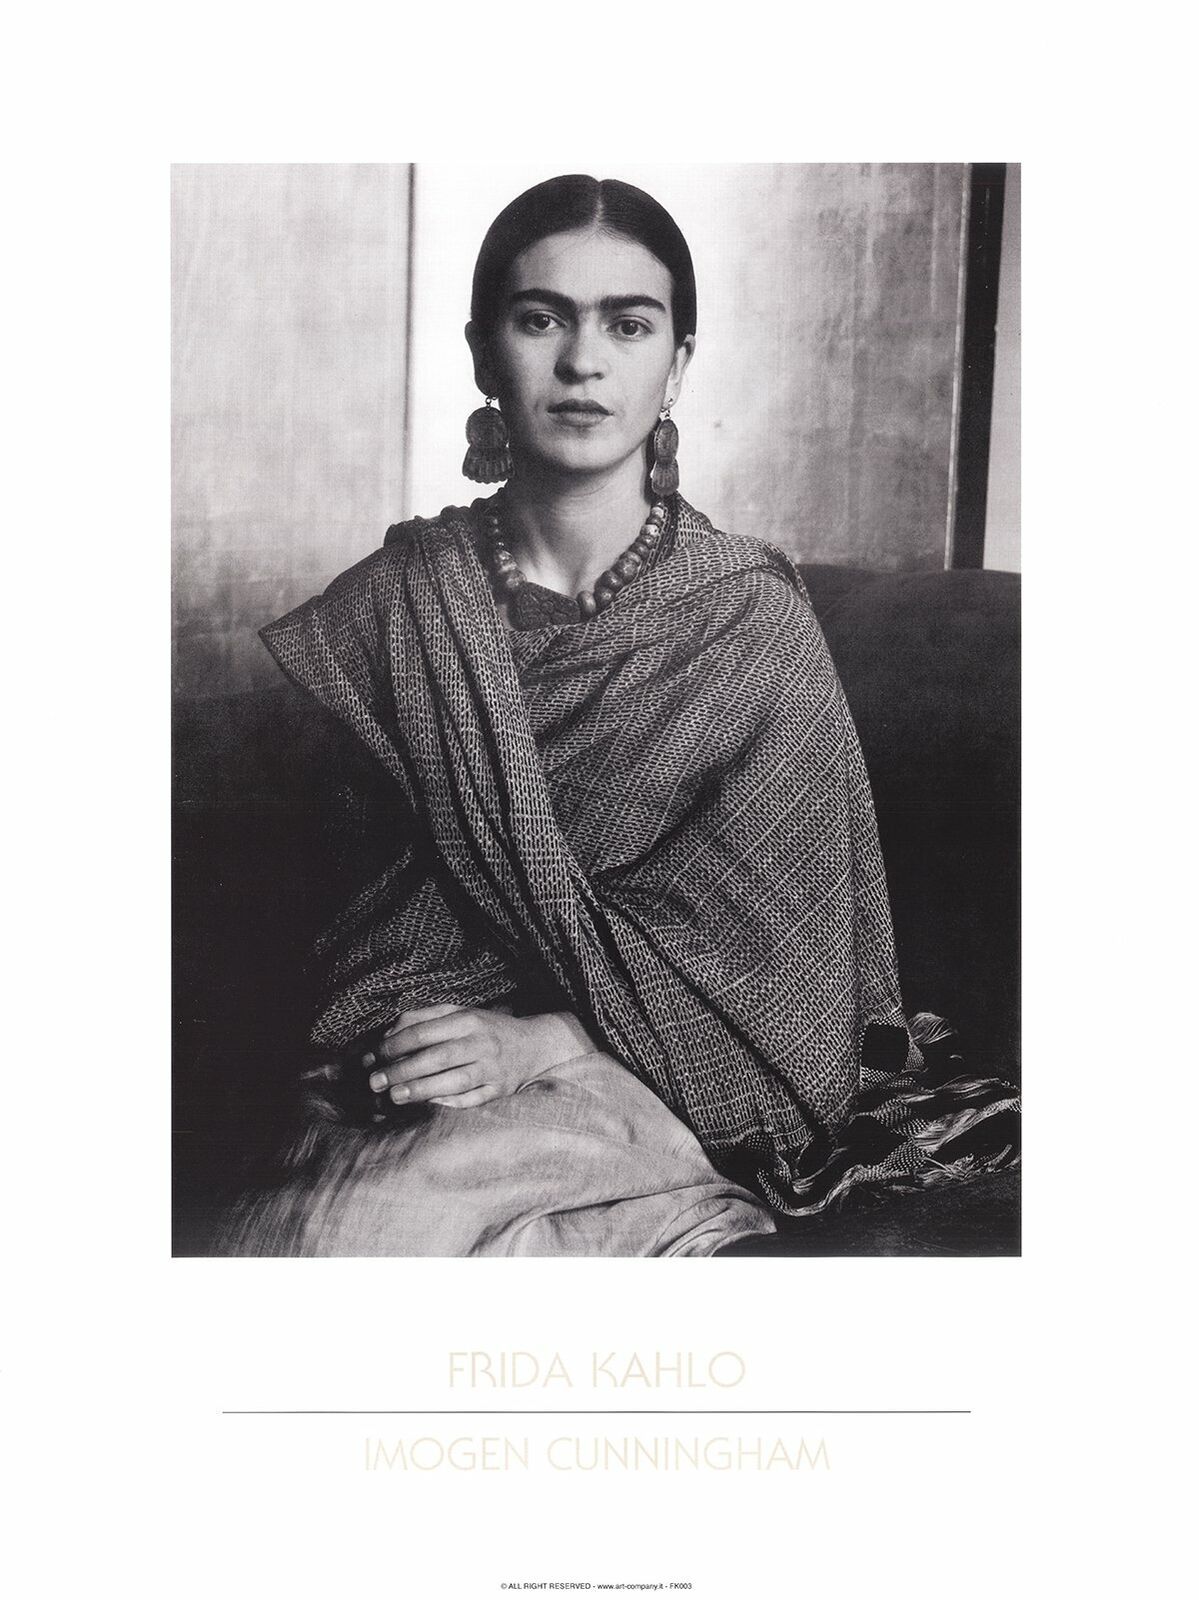 IMOGEN CUNNINGHAM Portrait of Frida Khalo 23.5 x 17.75 Poster Photography Black